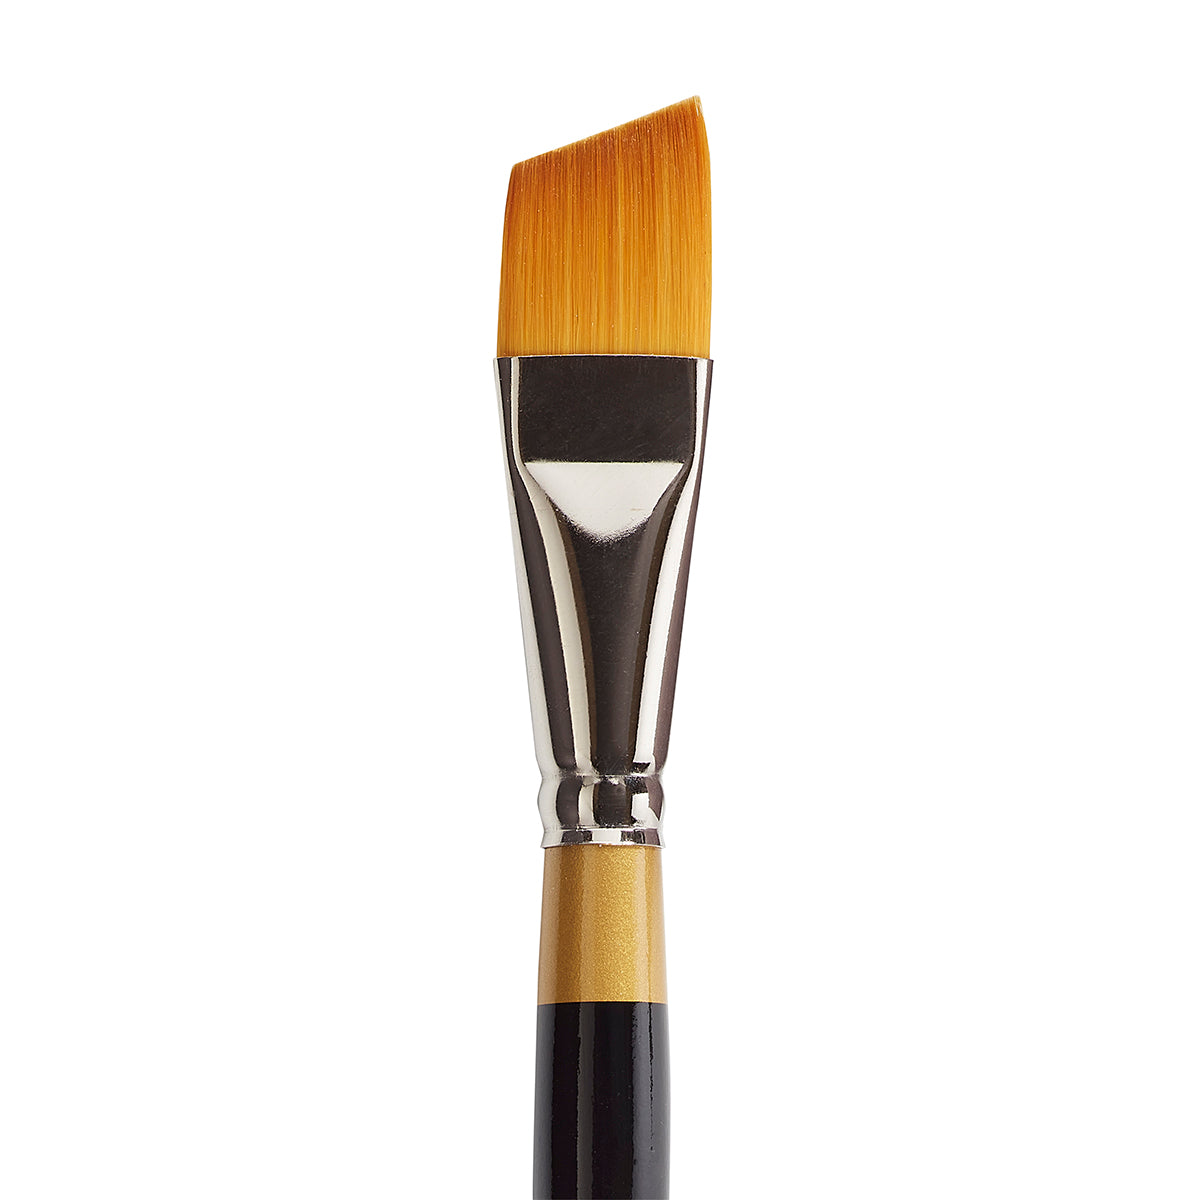 Angular Paint Brushes Set, 6 Pcs Angled Paintbrushes for Acrylic Oil Watercolor Gouache Painting, Premium Nylon Hair Angle Shader Brush for Art